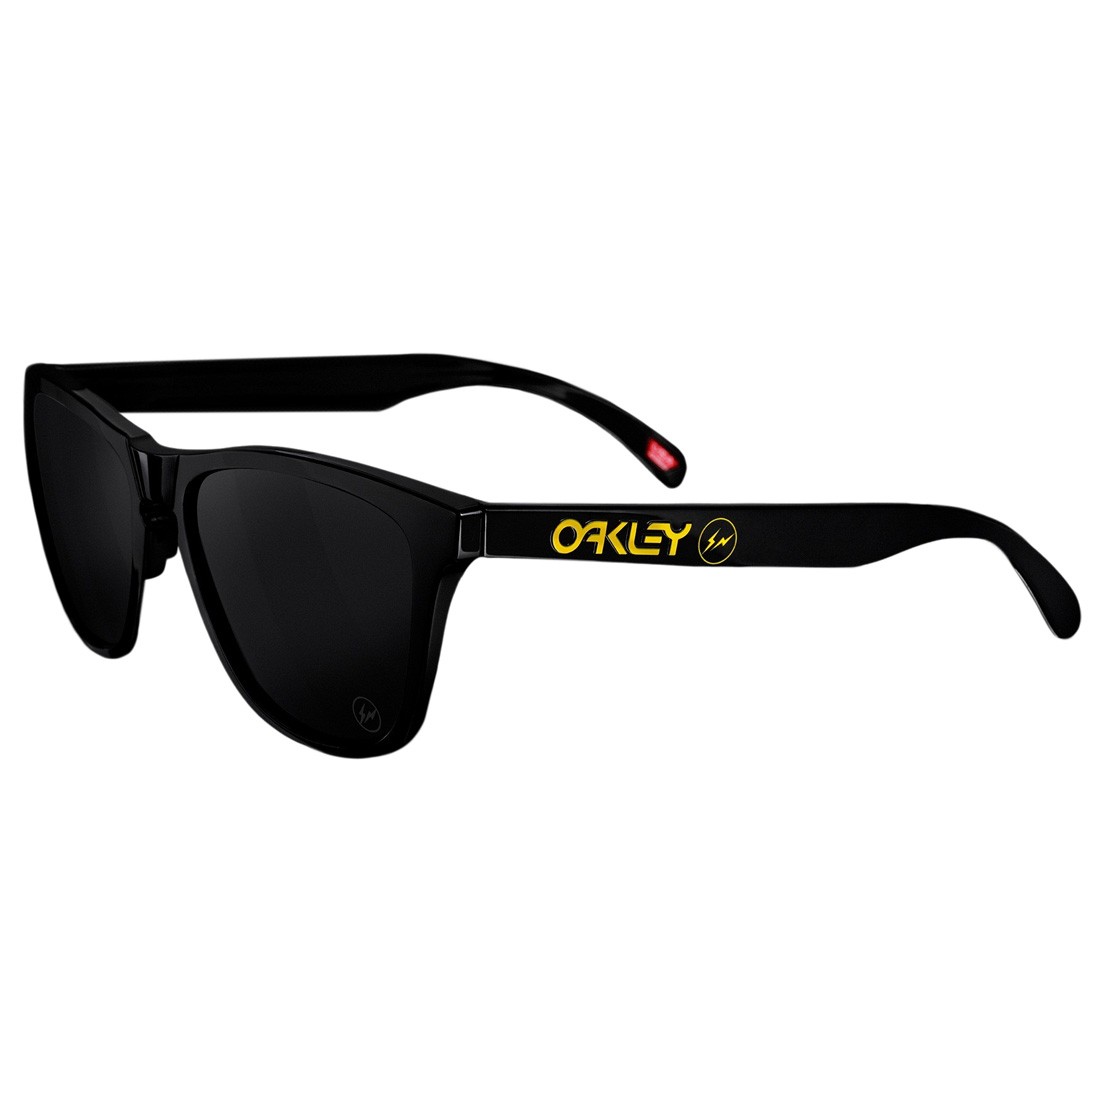 Oakley x Fragment Design Frogskins Sunglasses yellow prizm grey